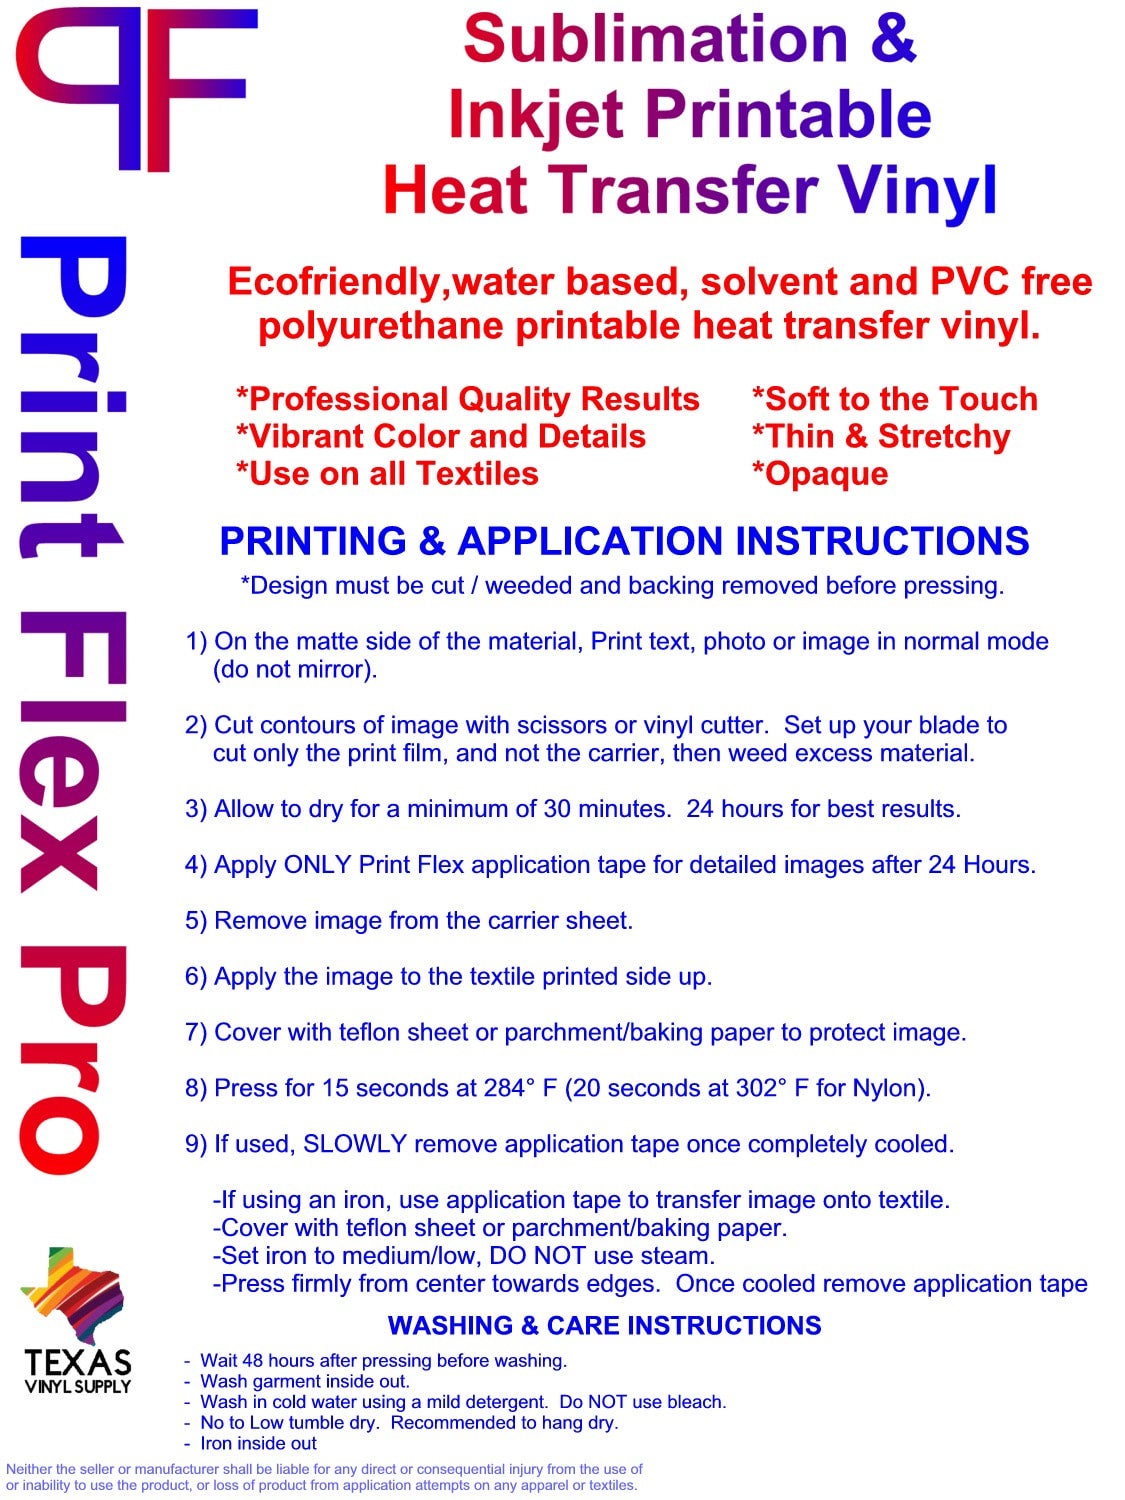 8.5x11 Printable HTV For Inkjet Printers